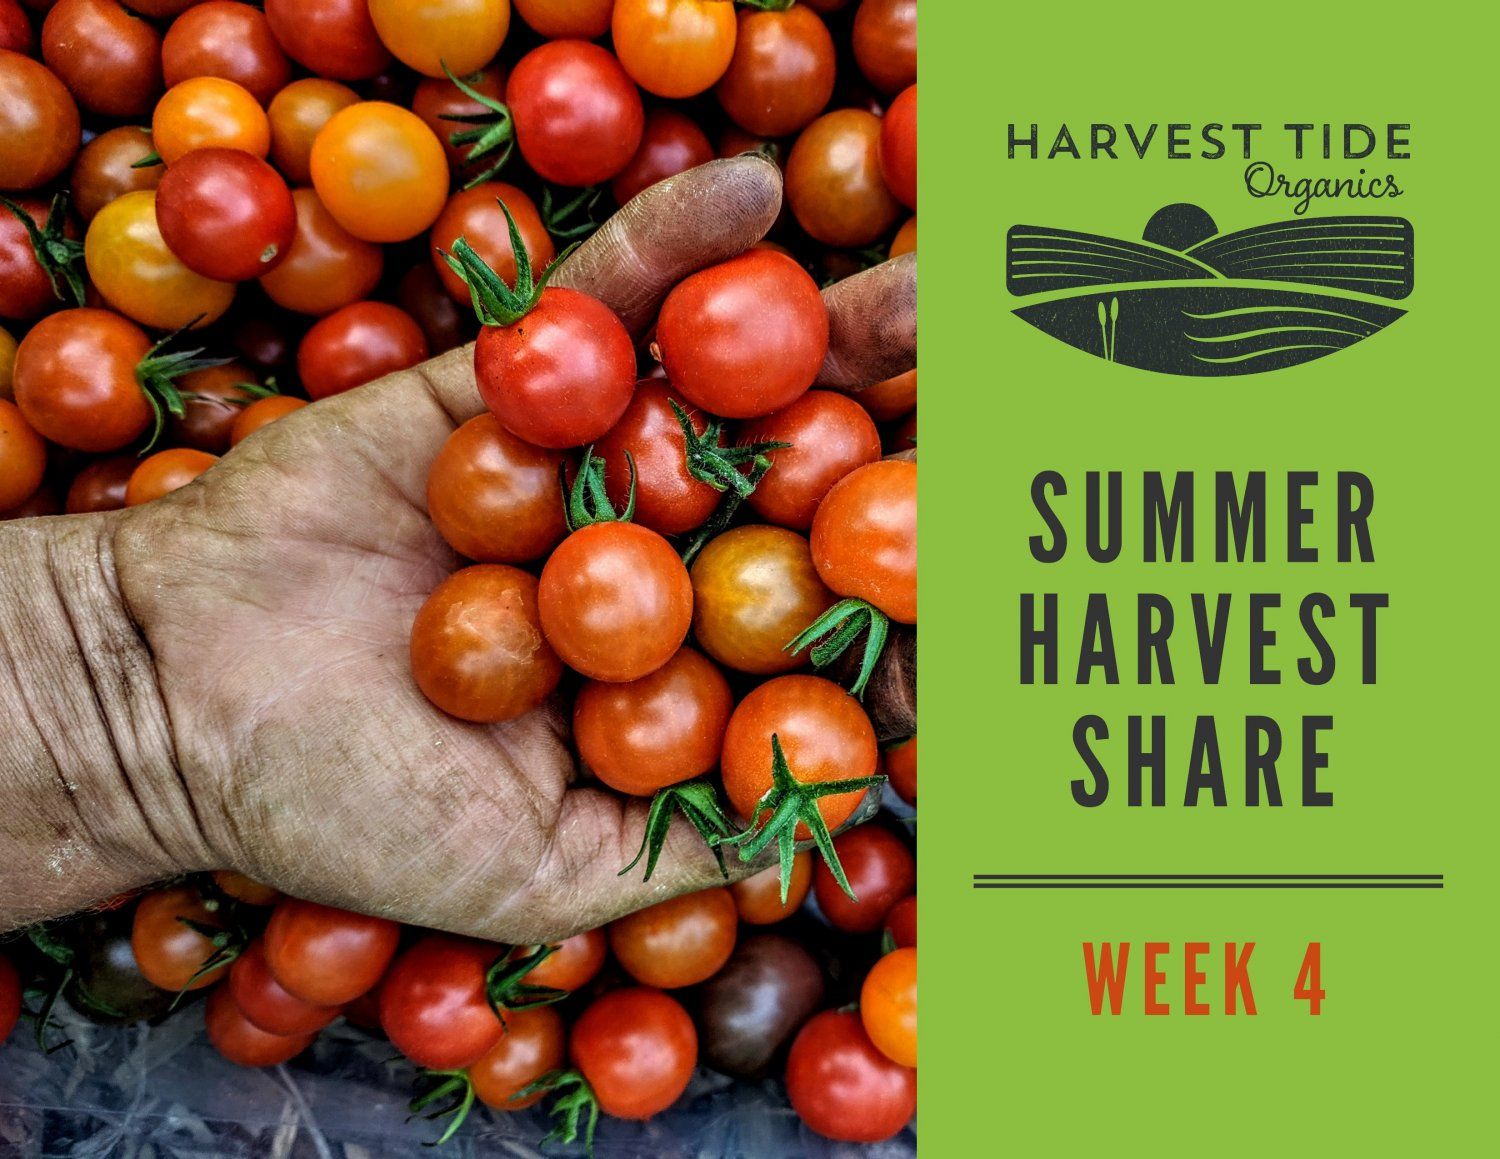 Next Happening: Summer Harvest Share - Week 4